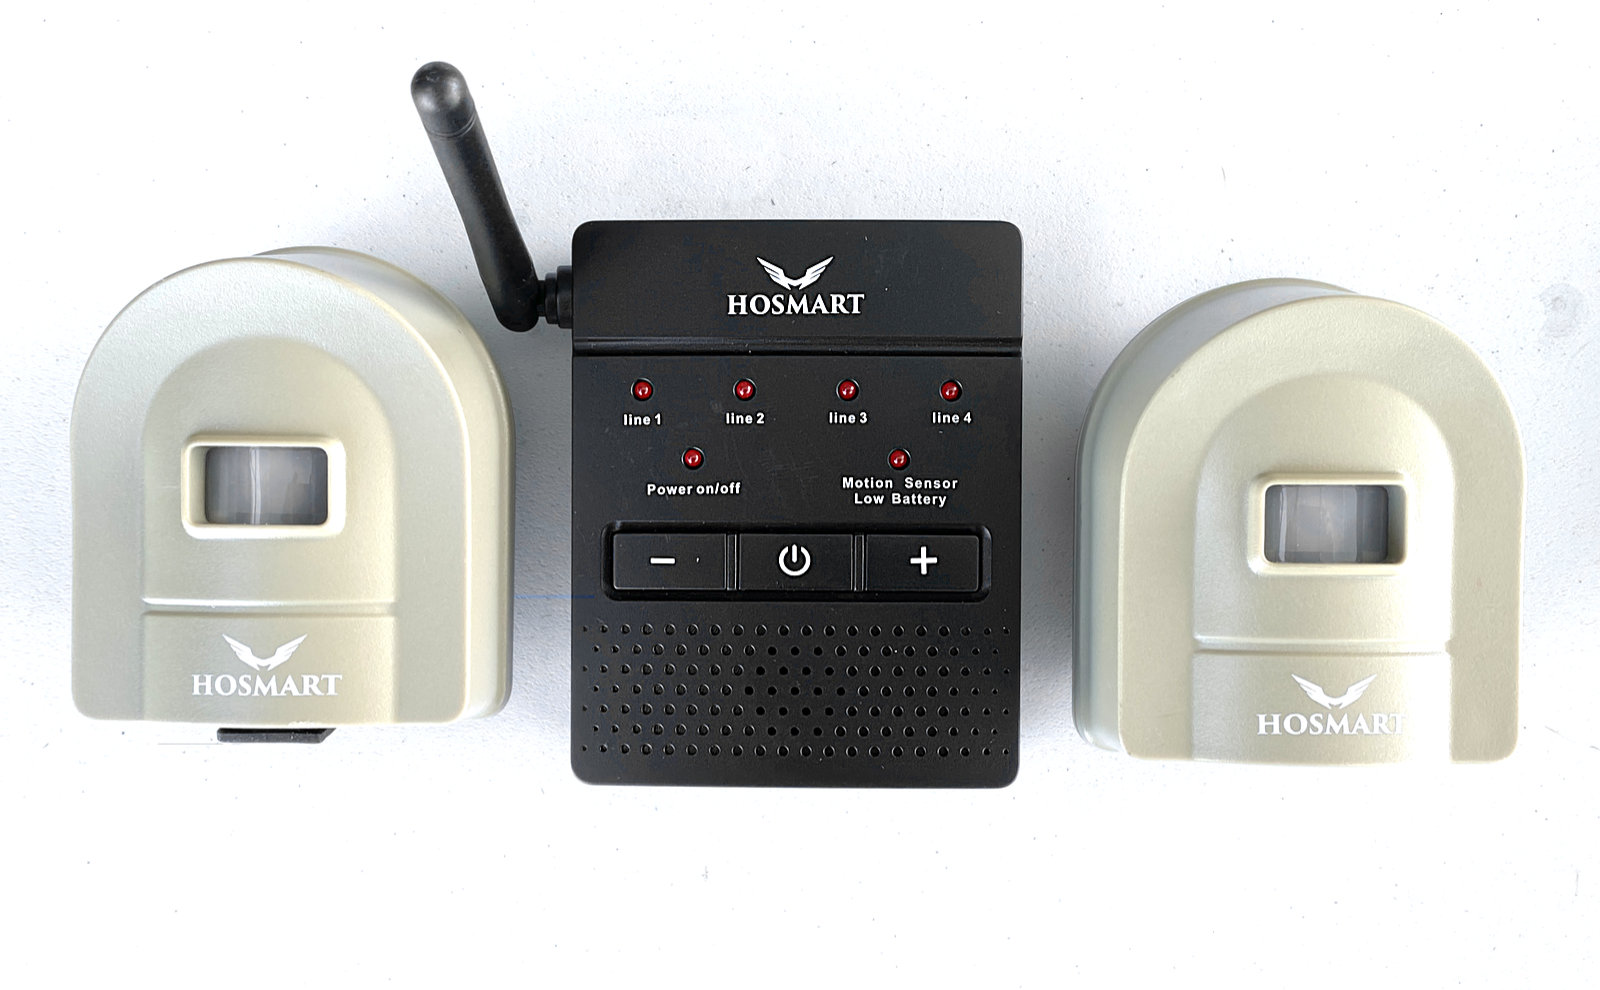 Hosmart wireless driveway alarm 1/2 mile range